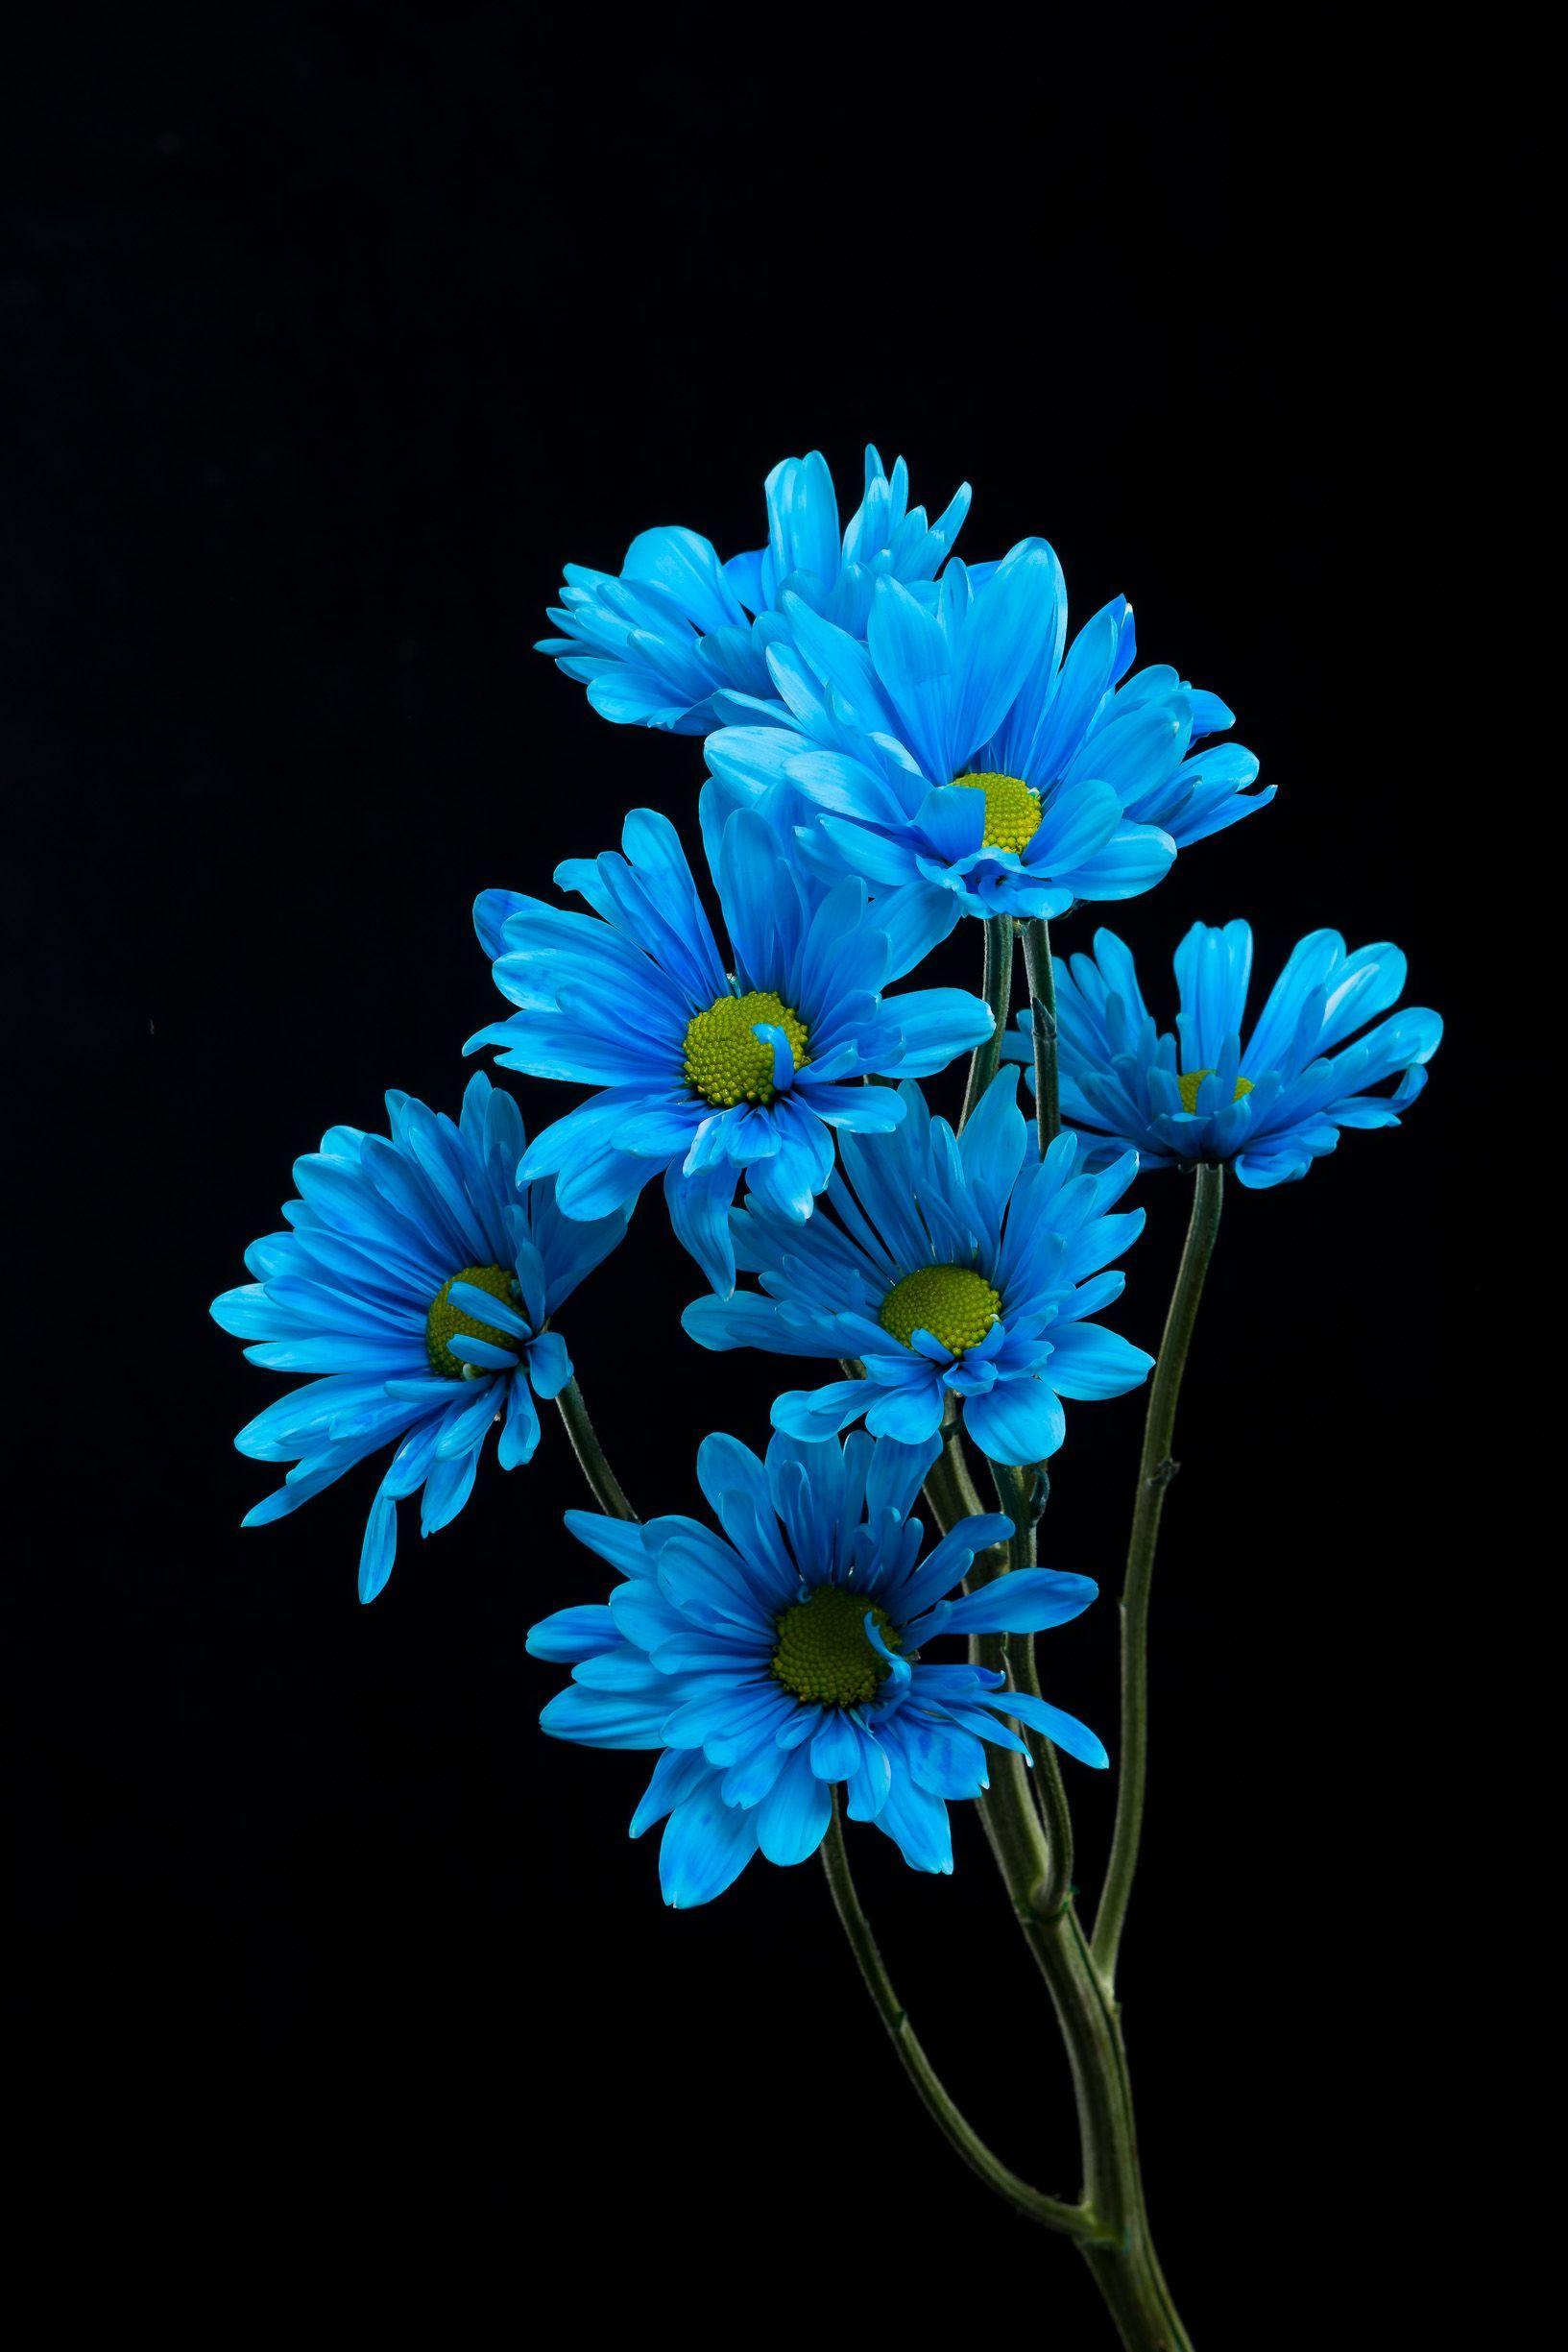 Blue Flowers Aesthetic Wallpapers - Top Free Blue Flowers Aesthetic